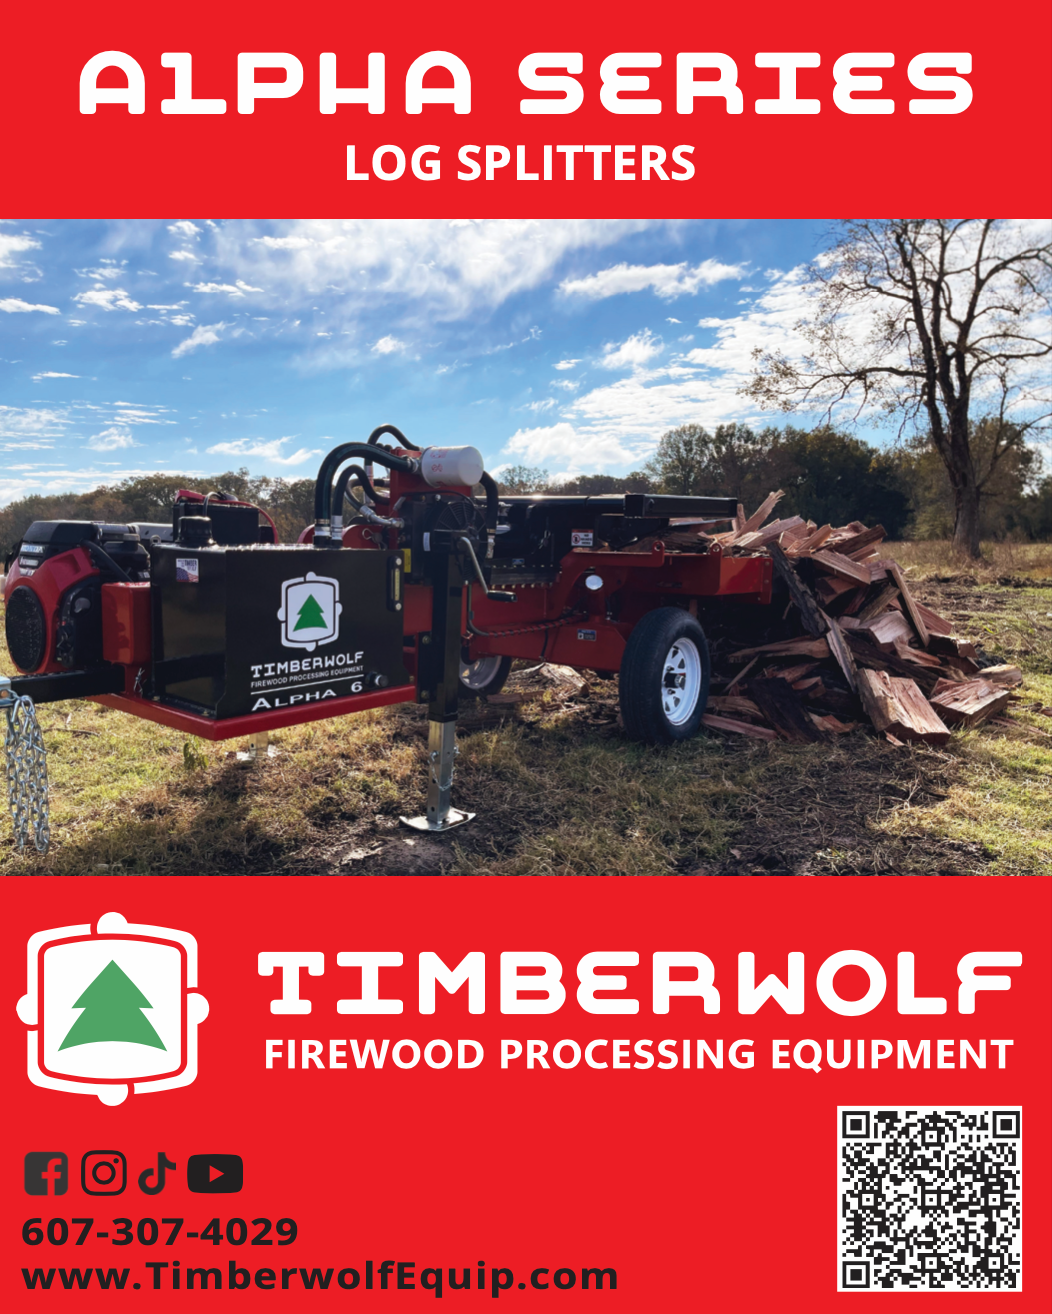 Timberwolf Firewood Processing Equipment Alpha Series Log Splitter Technical Specifications Brochure Download